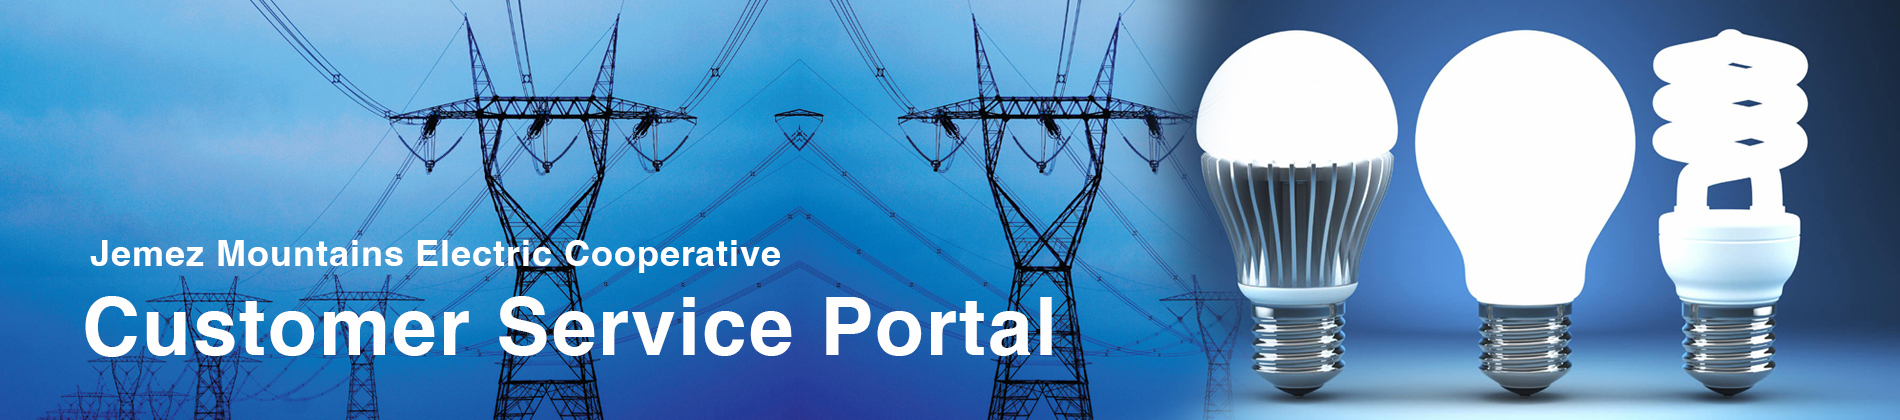 Jemez Mountains Electric Cooperative Customer Service Portal